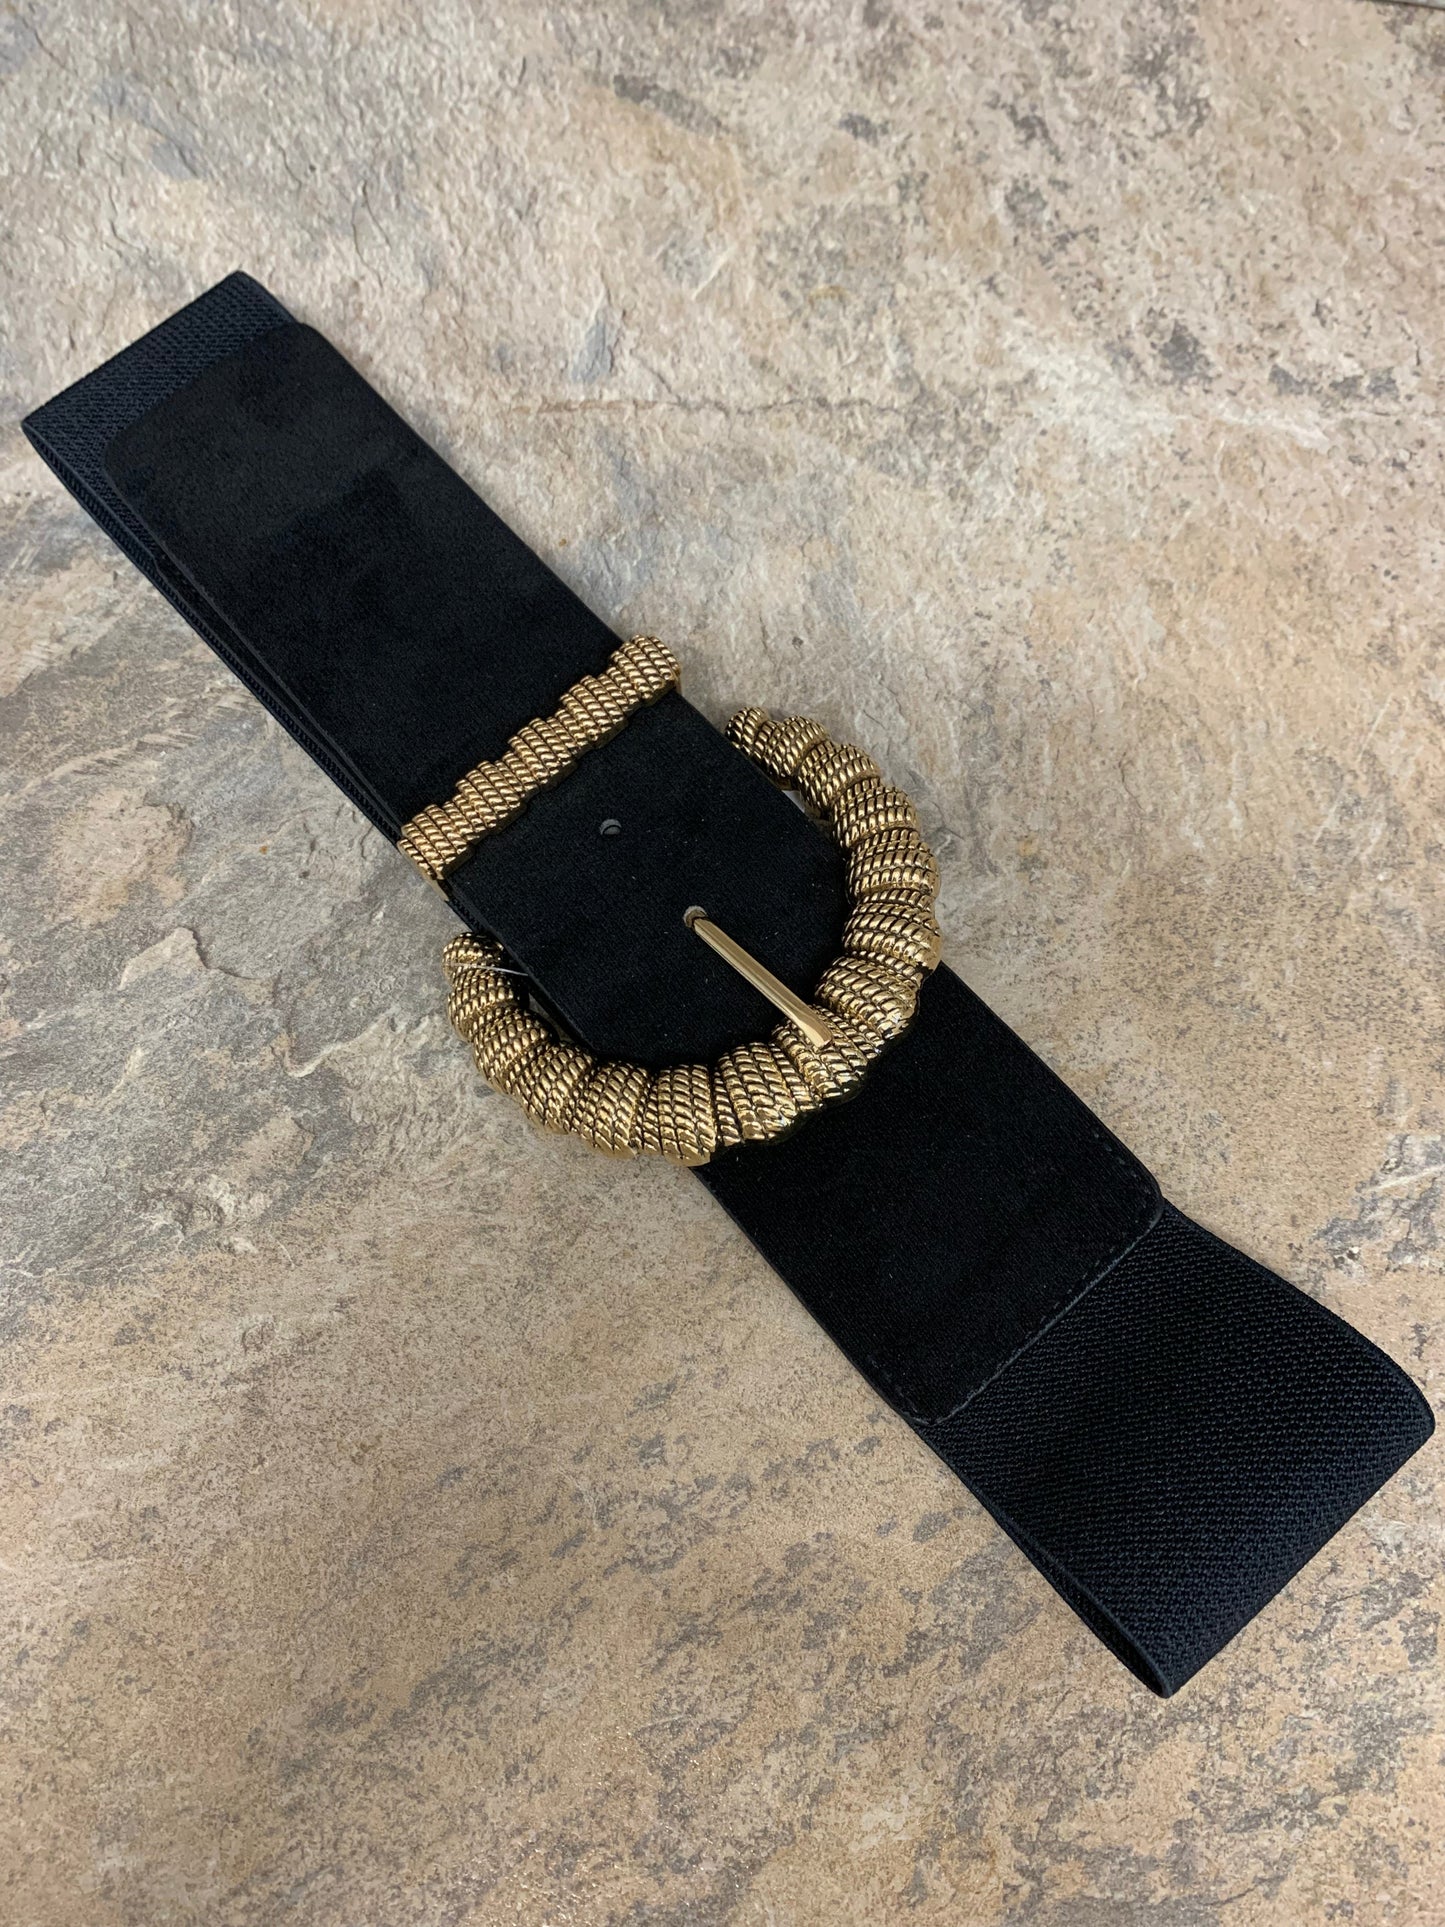 Black faux suede gold buckle belt